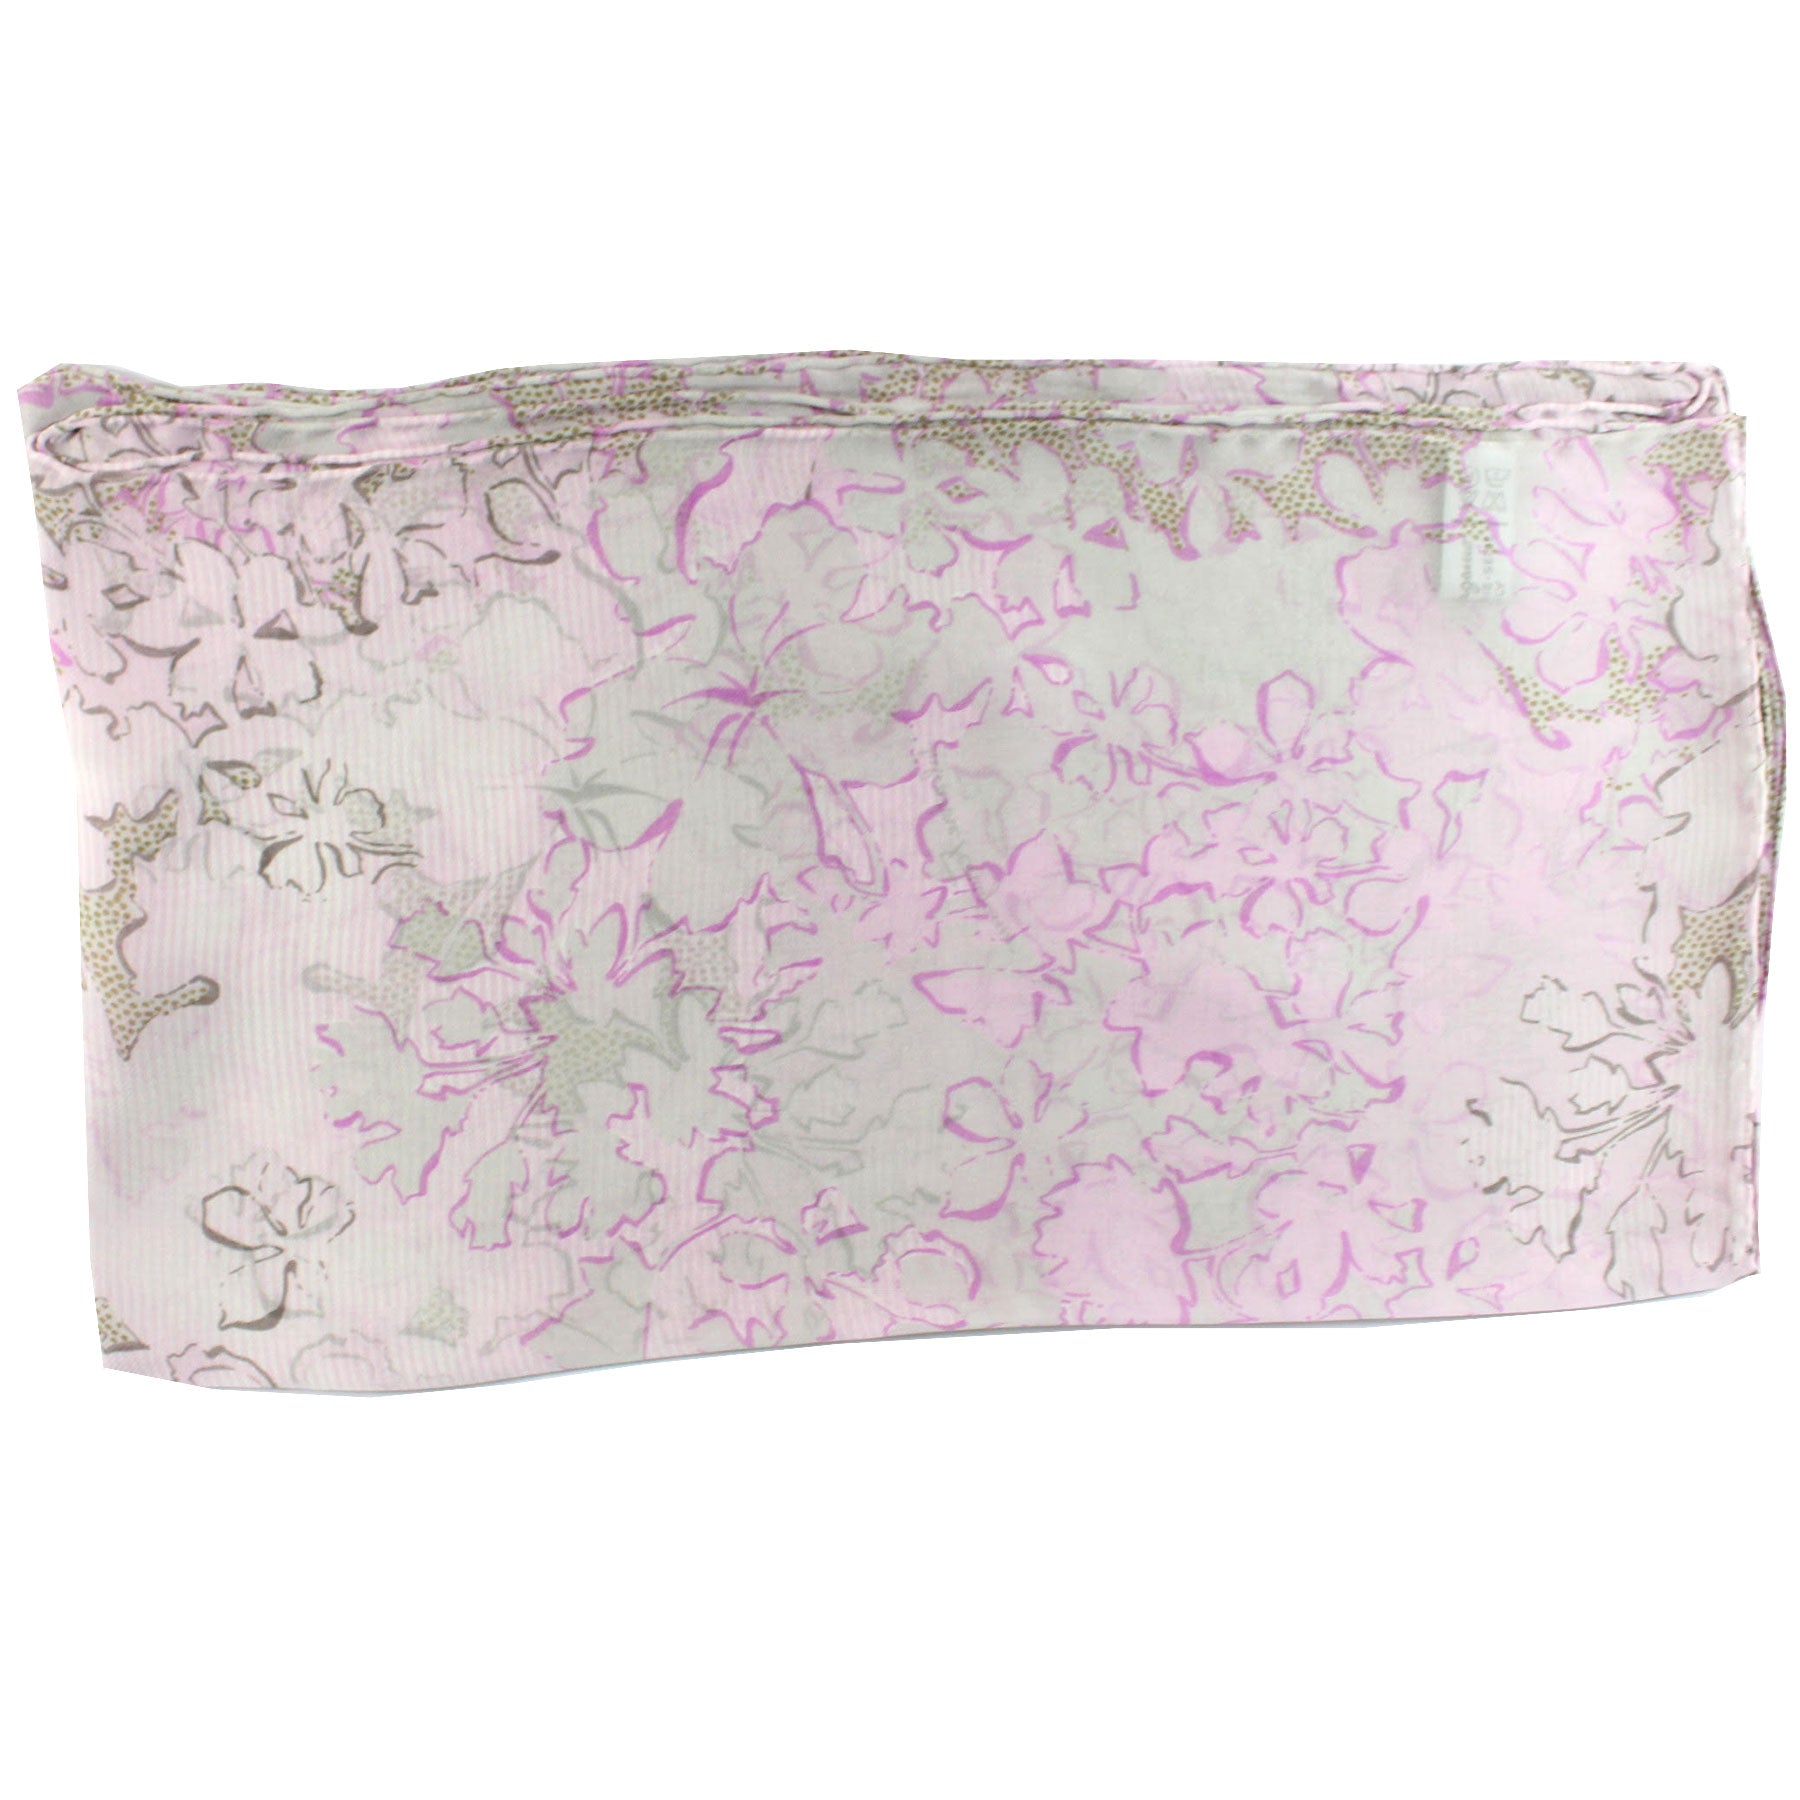 Salvatore Ferragamo Scarf Pink Gray Floral - Chiffon Silk Designer Shawl